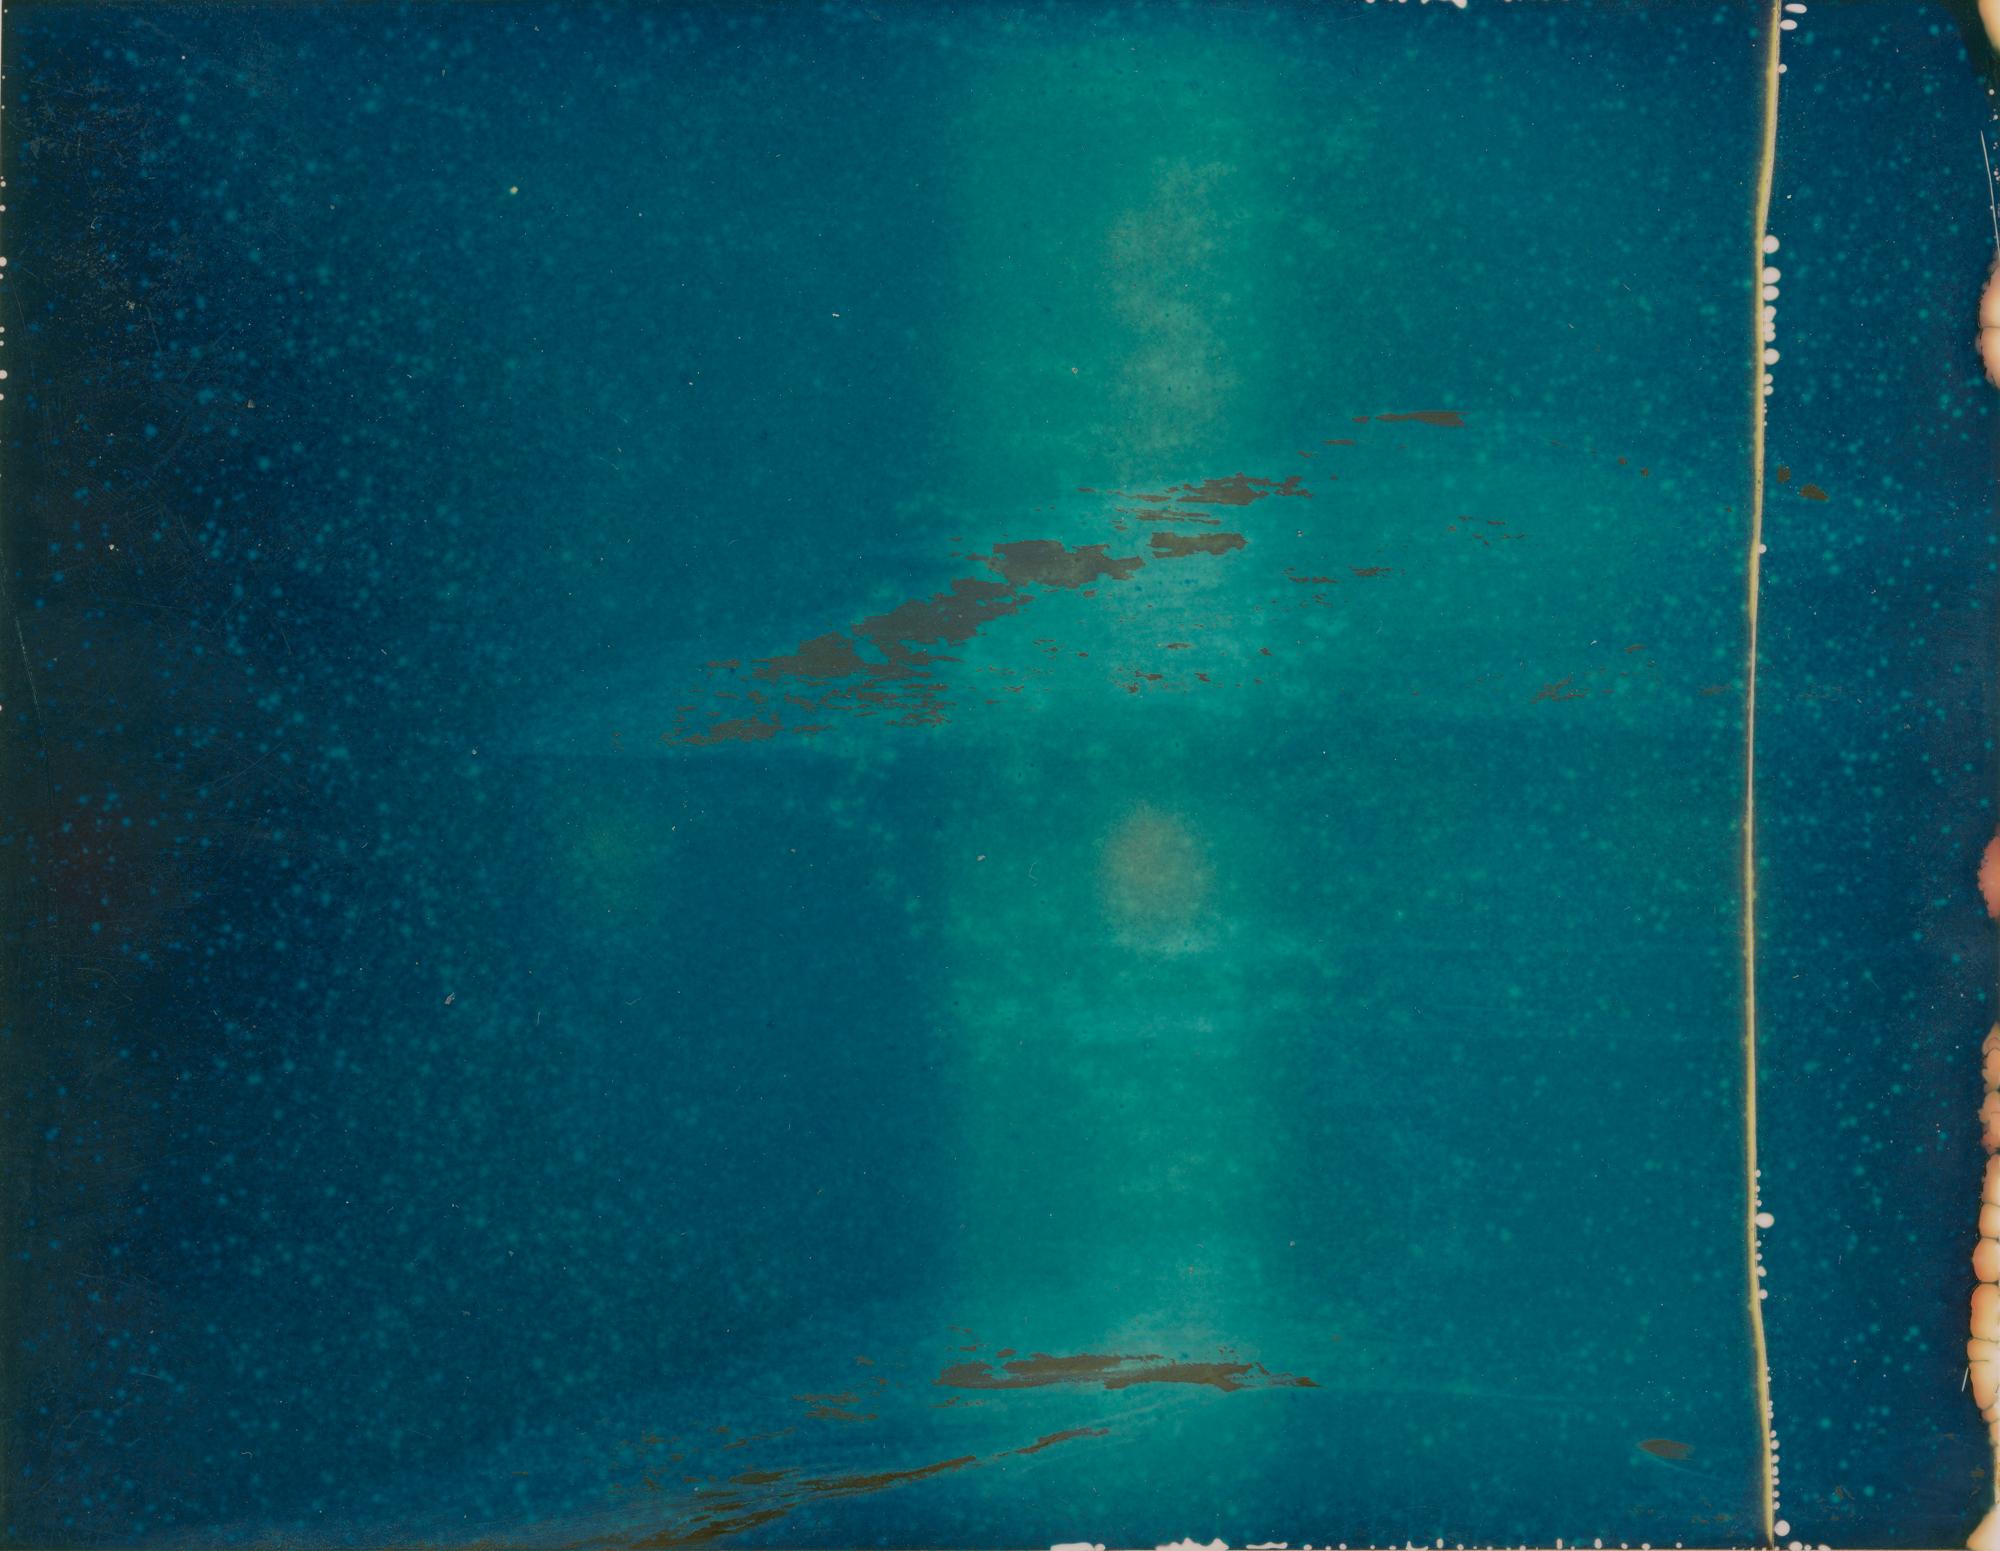 Stefanie Schneider Abstract Photograph - Blue (Deconstructivism) - Contemporary, Expired Polaroid